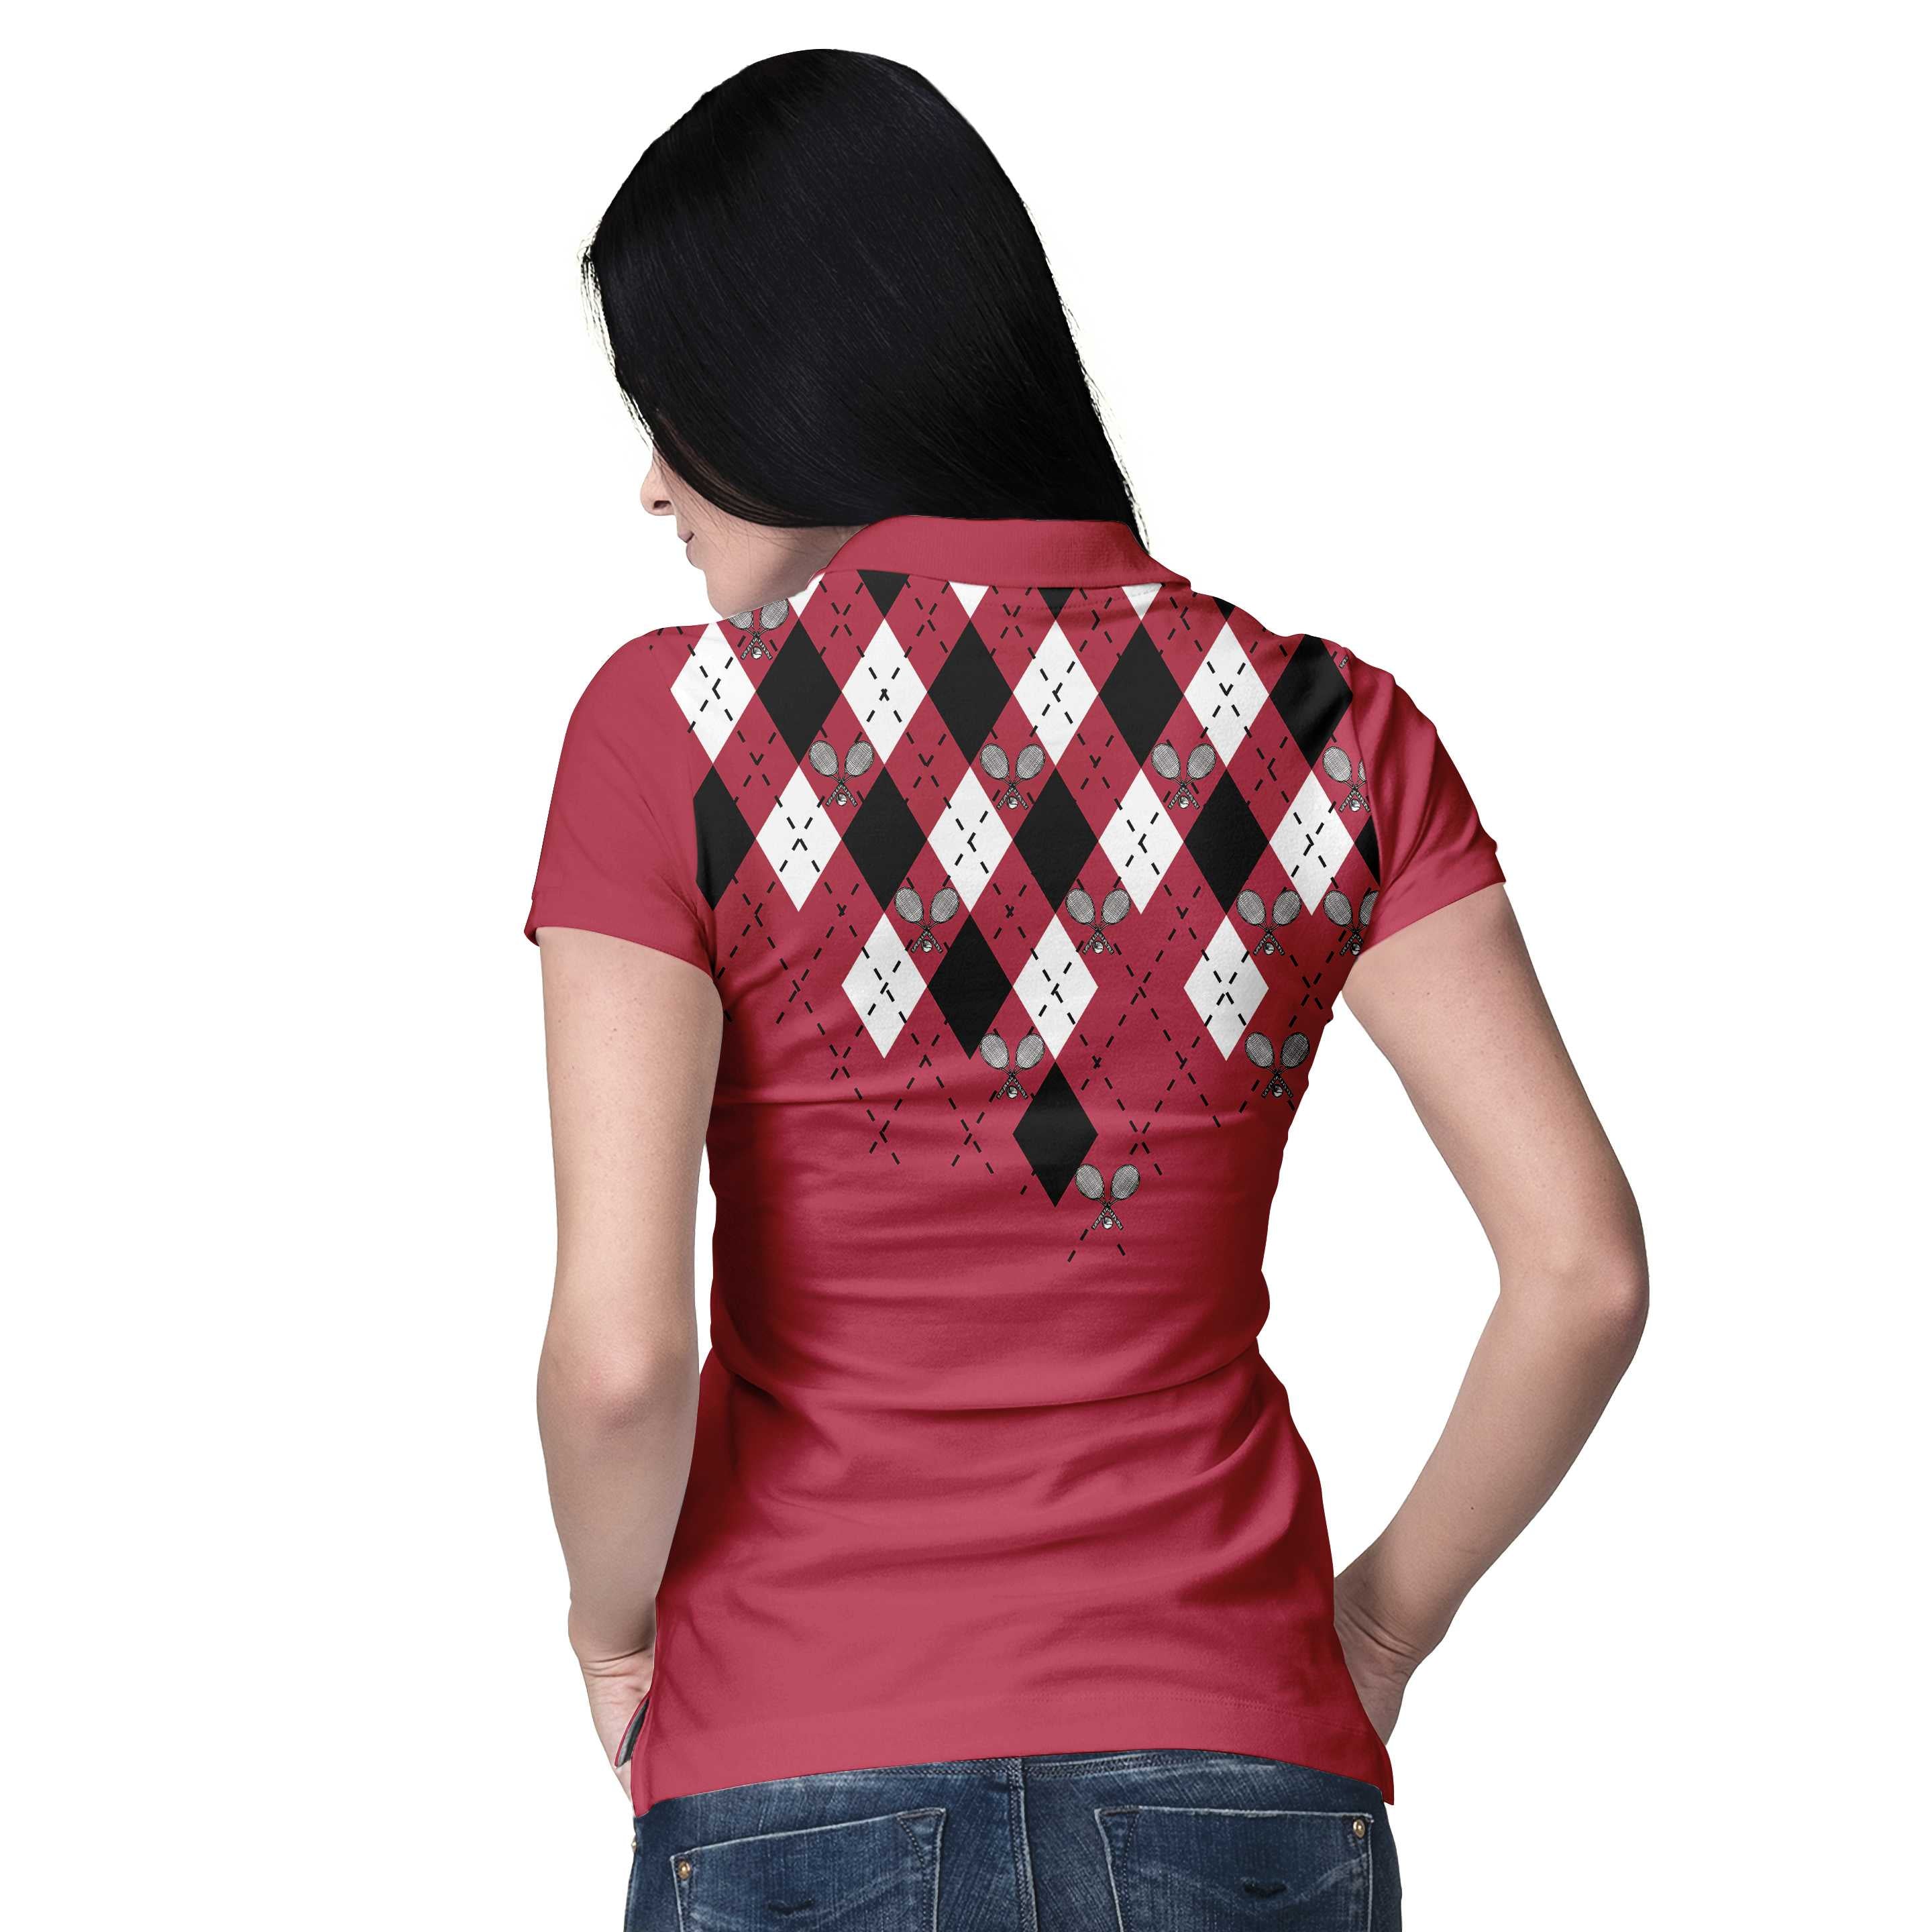 Tennis Shirt With Argyle Pattern Short Sleeve Women Polo Shirt Coolspod